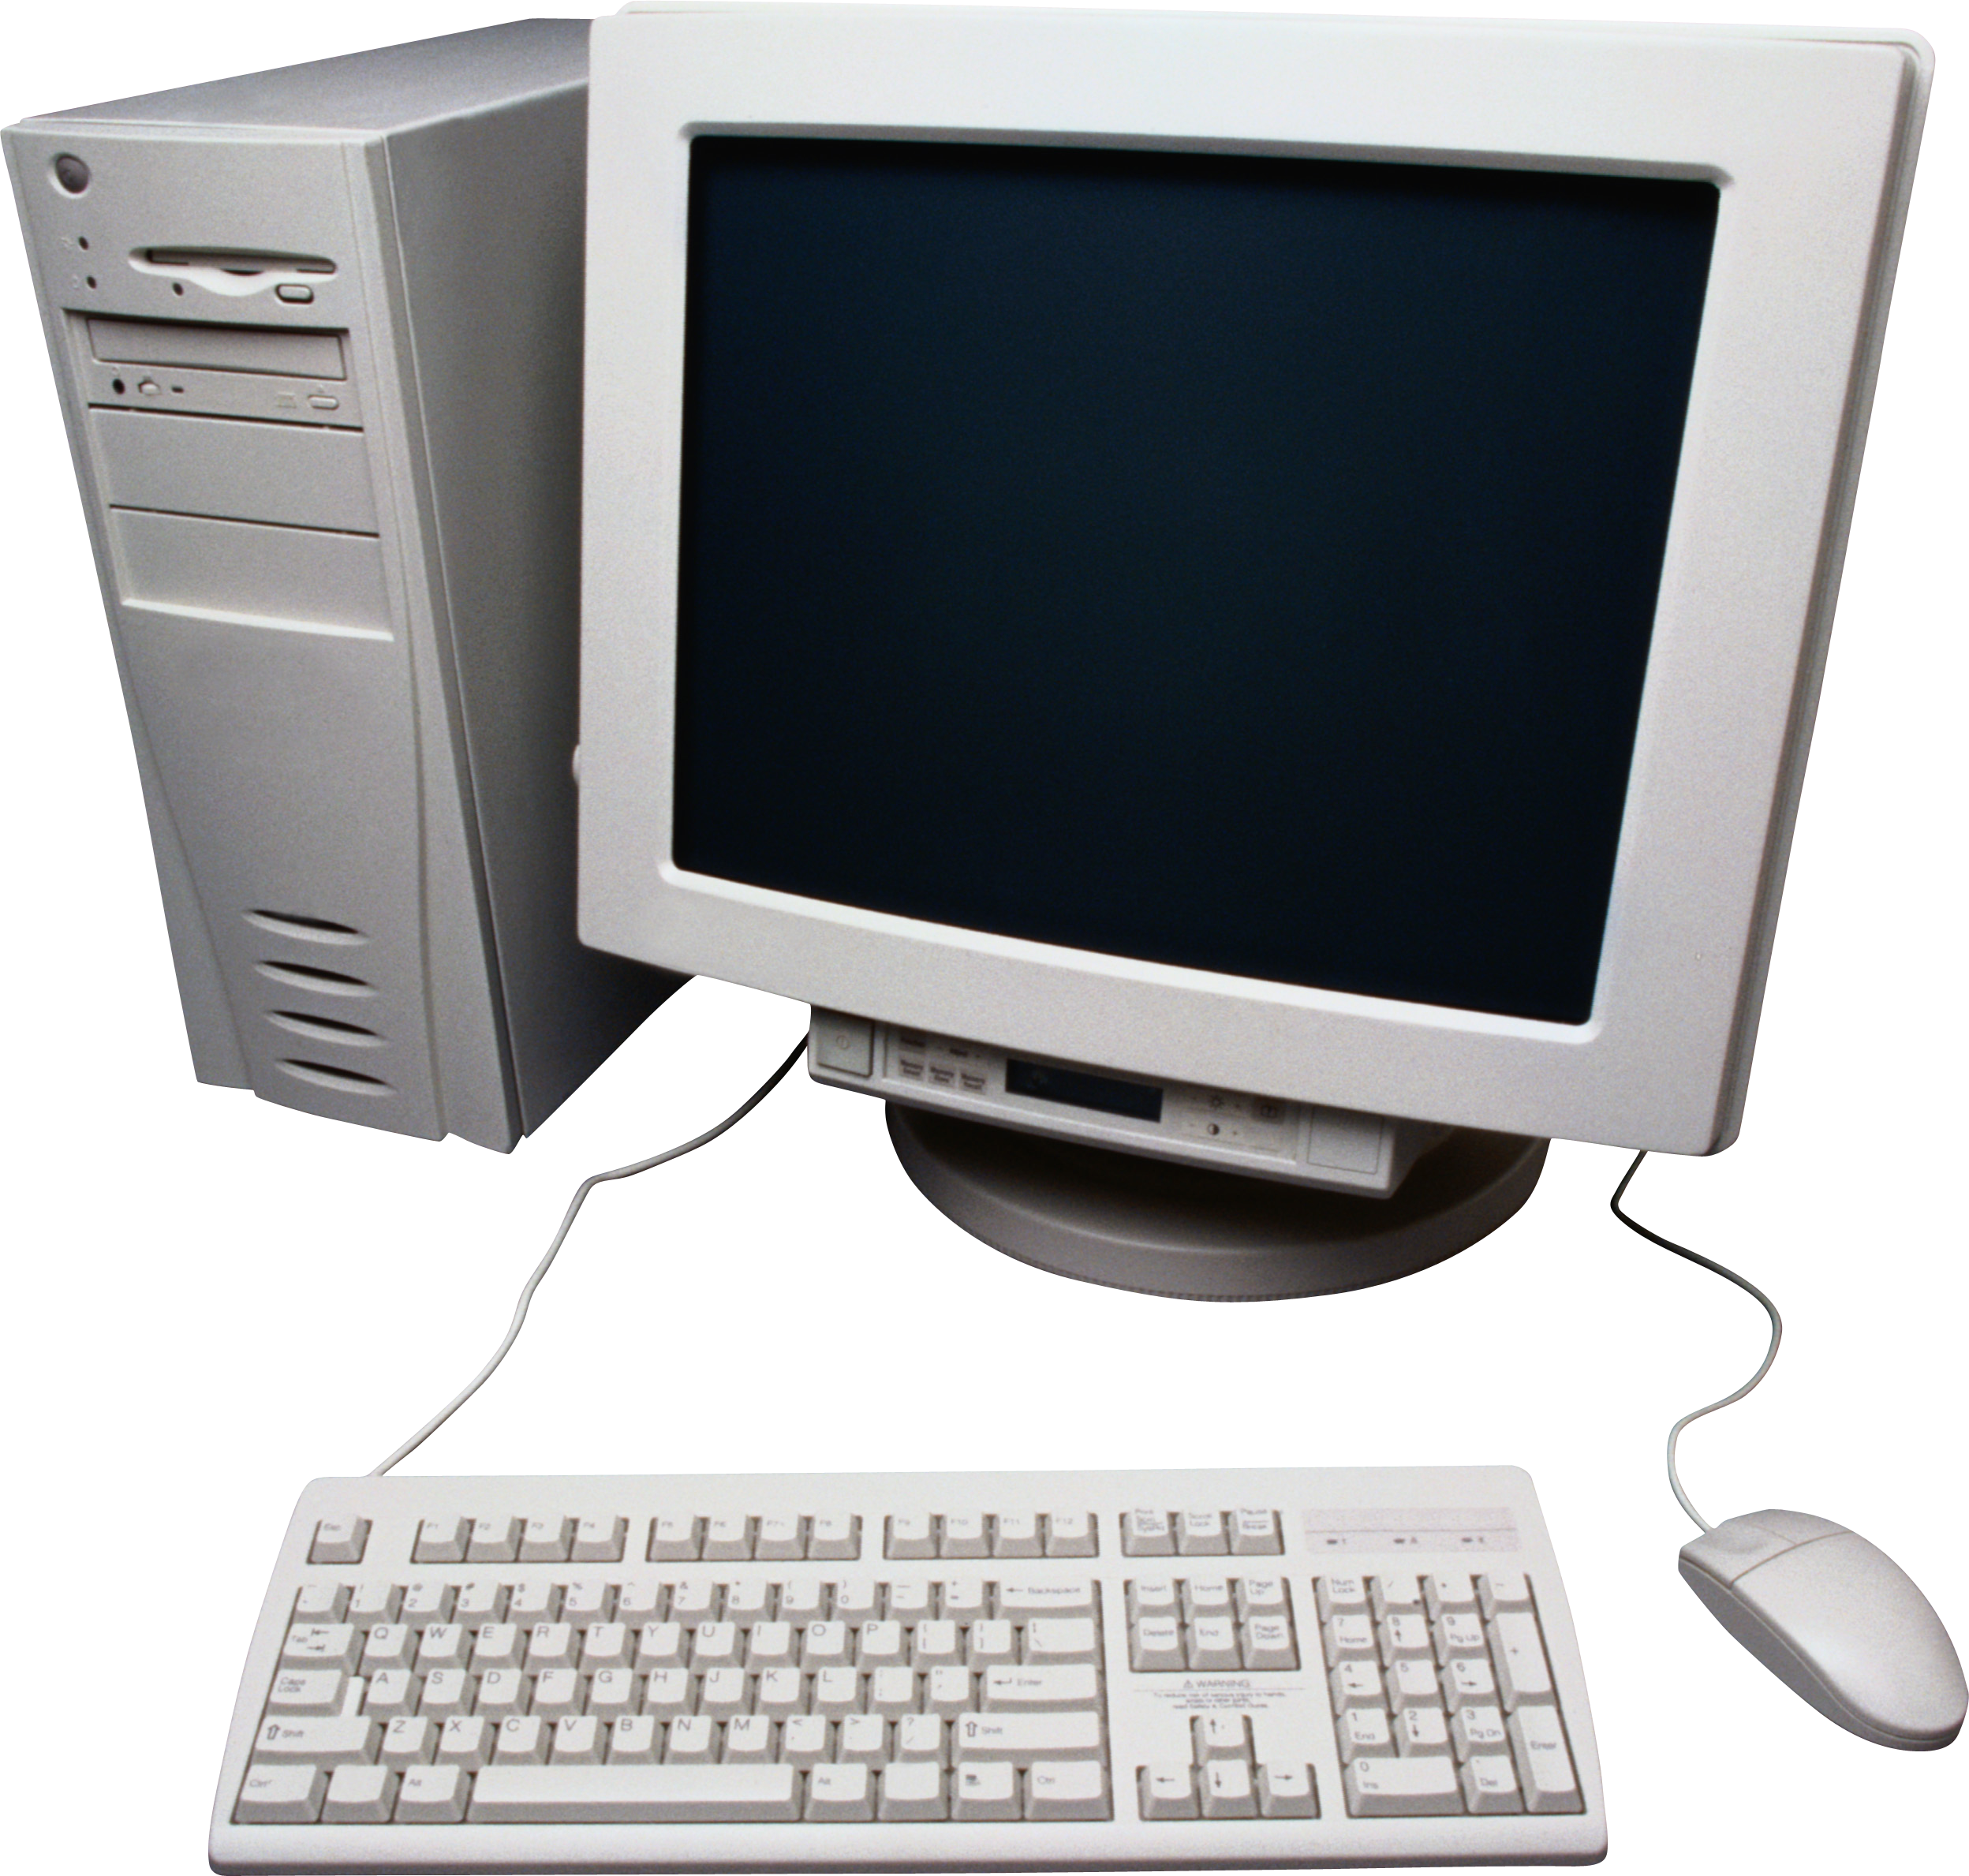 Компьютер PNG фото